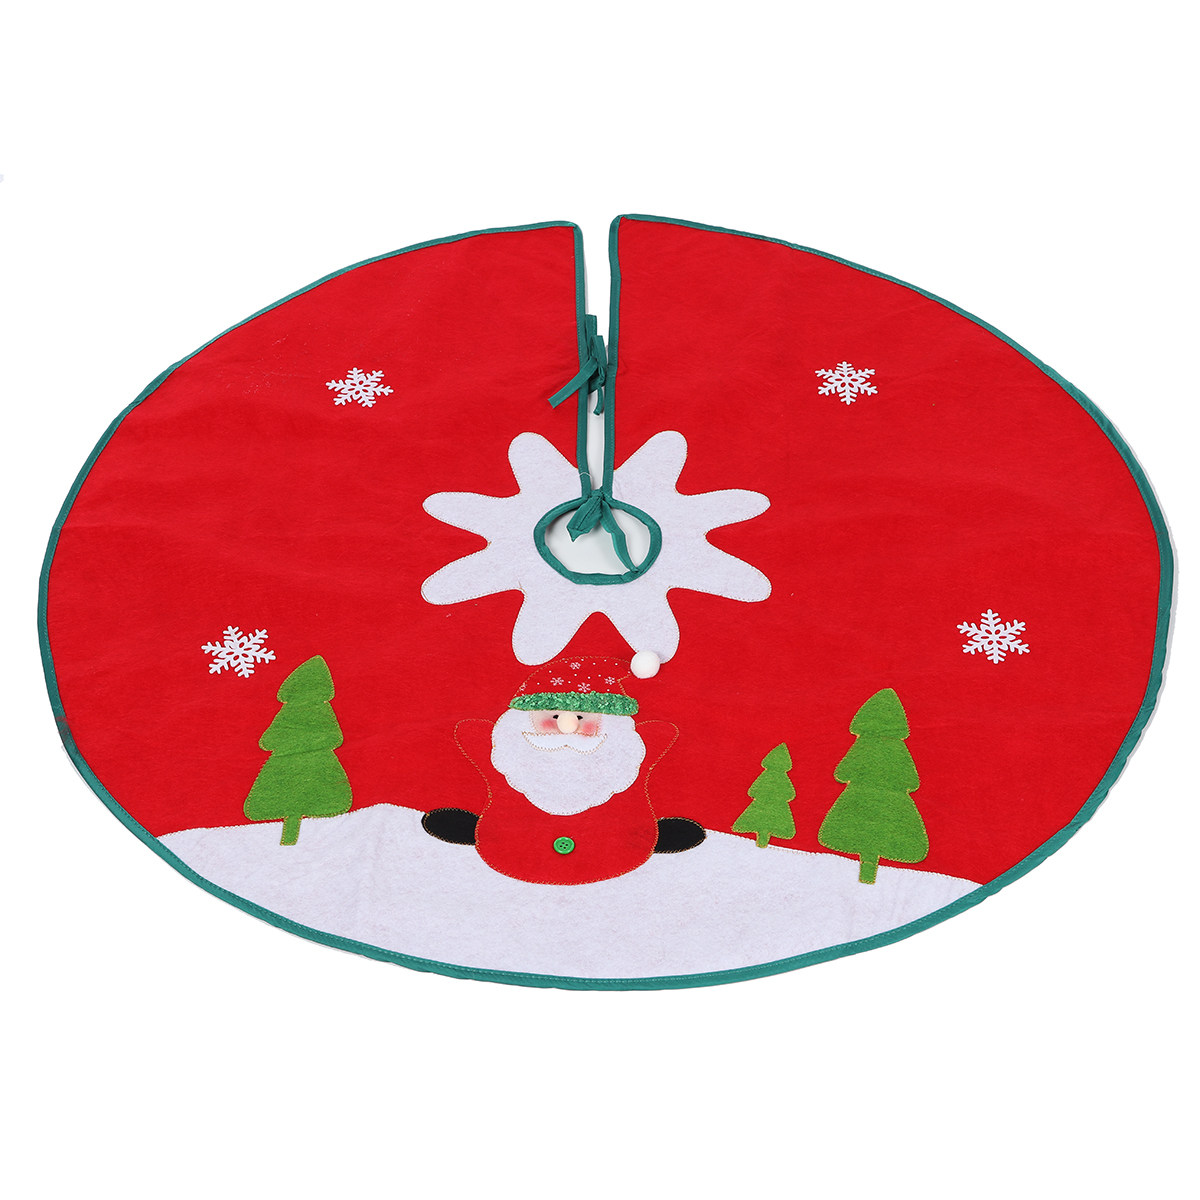 2020-Christmas-Decor-Santa-Claus-Christmas-Tree-Skirt-Aprons-New-Year-Xmas-Tree-Carpet-Foot-Cover-fo-1770951-3